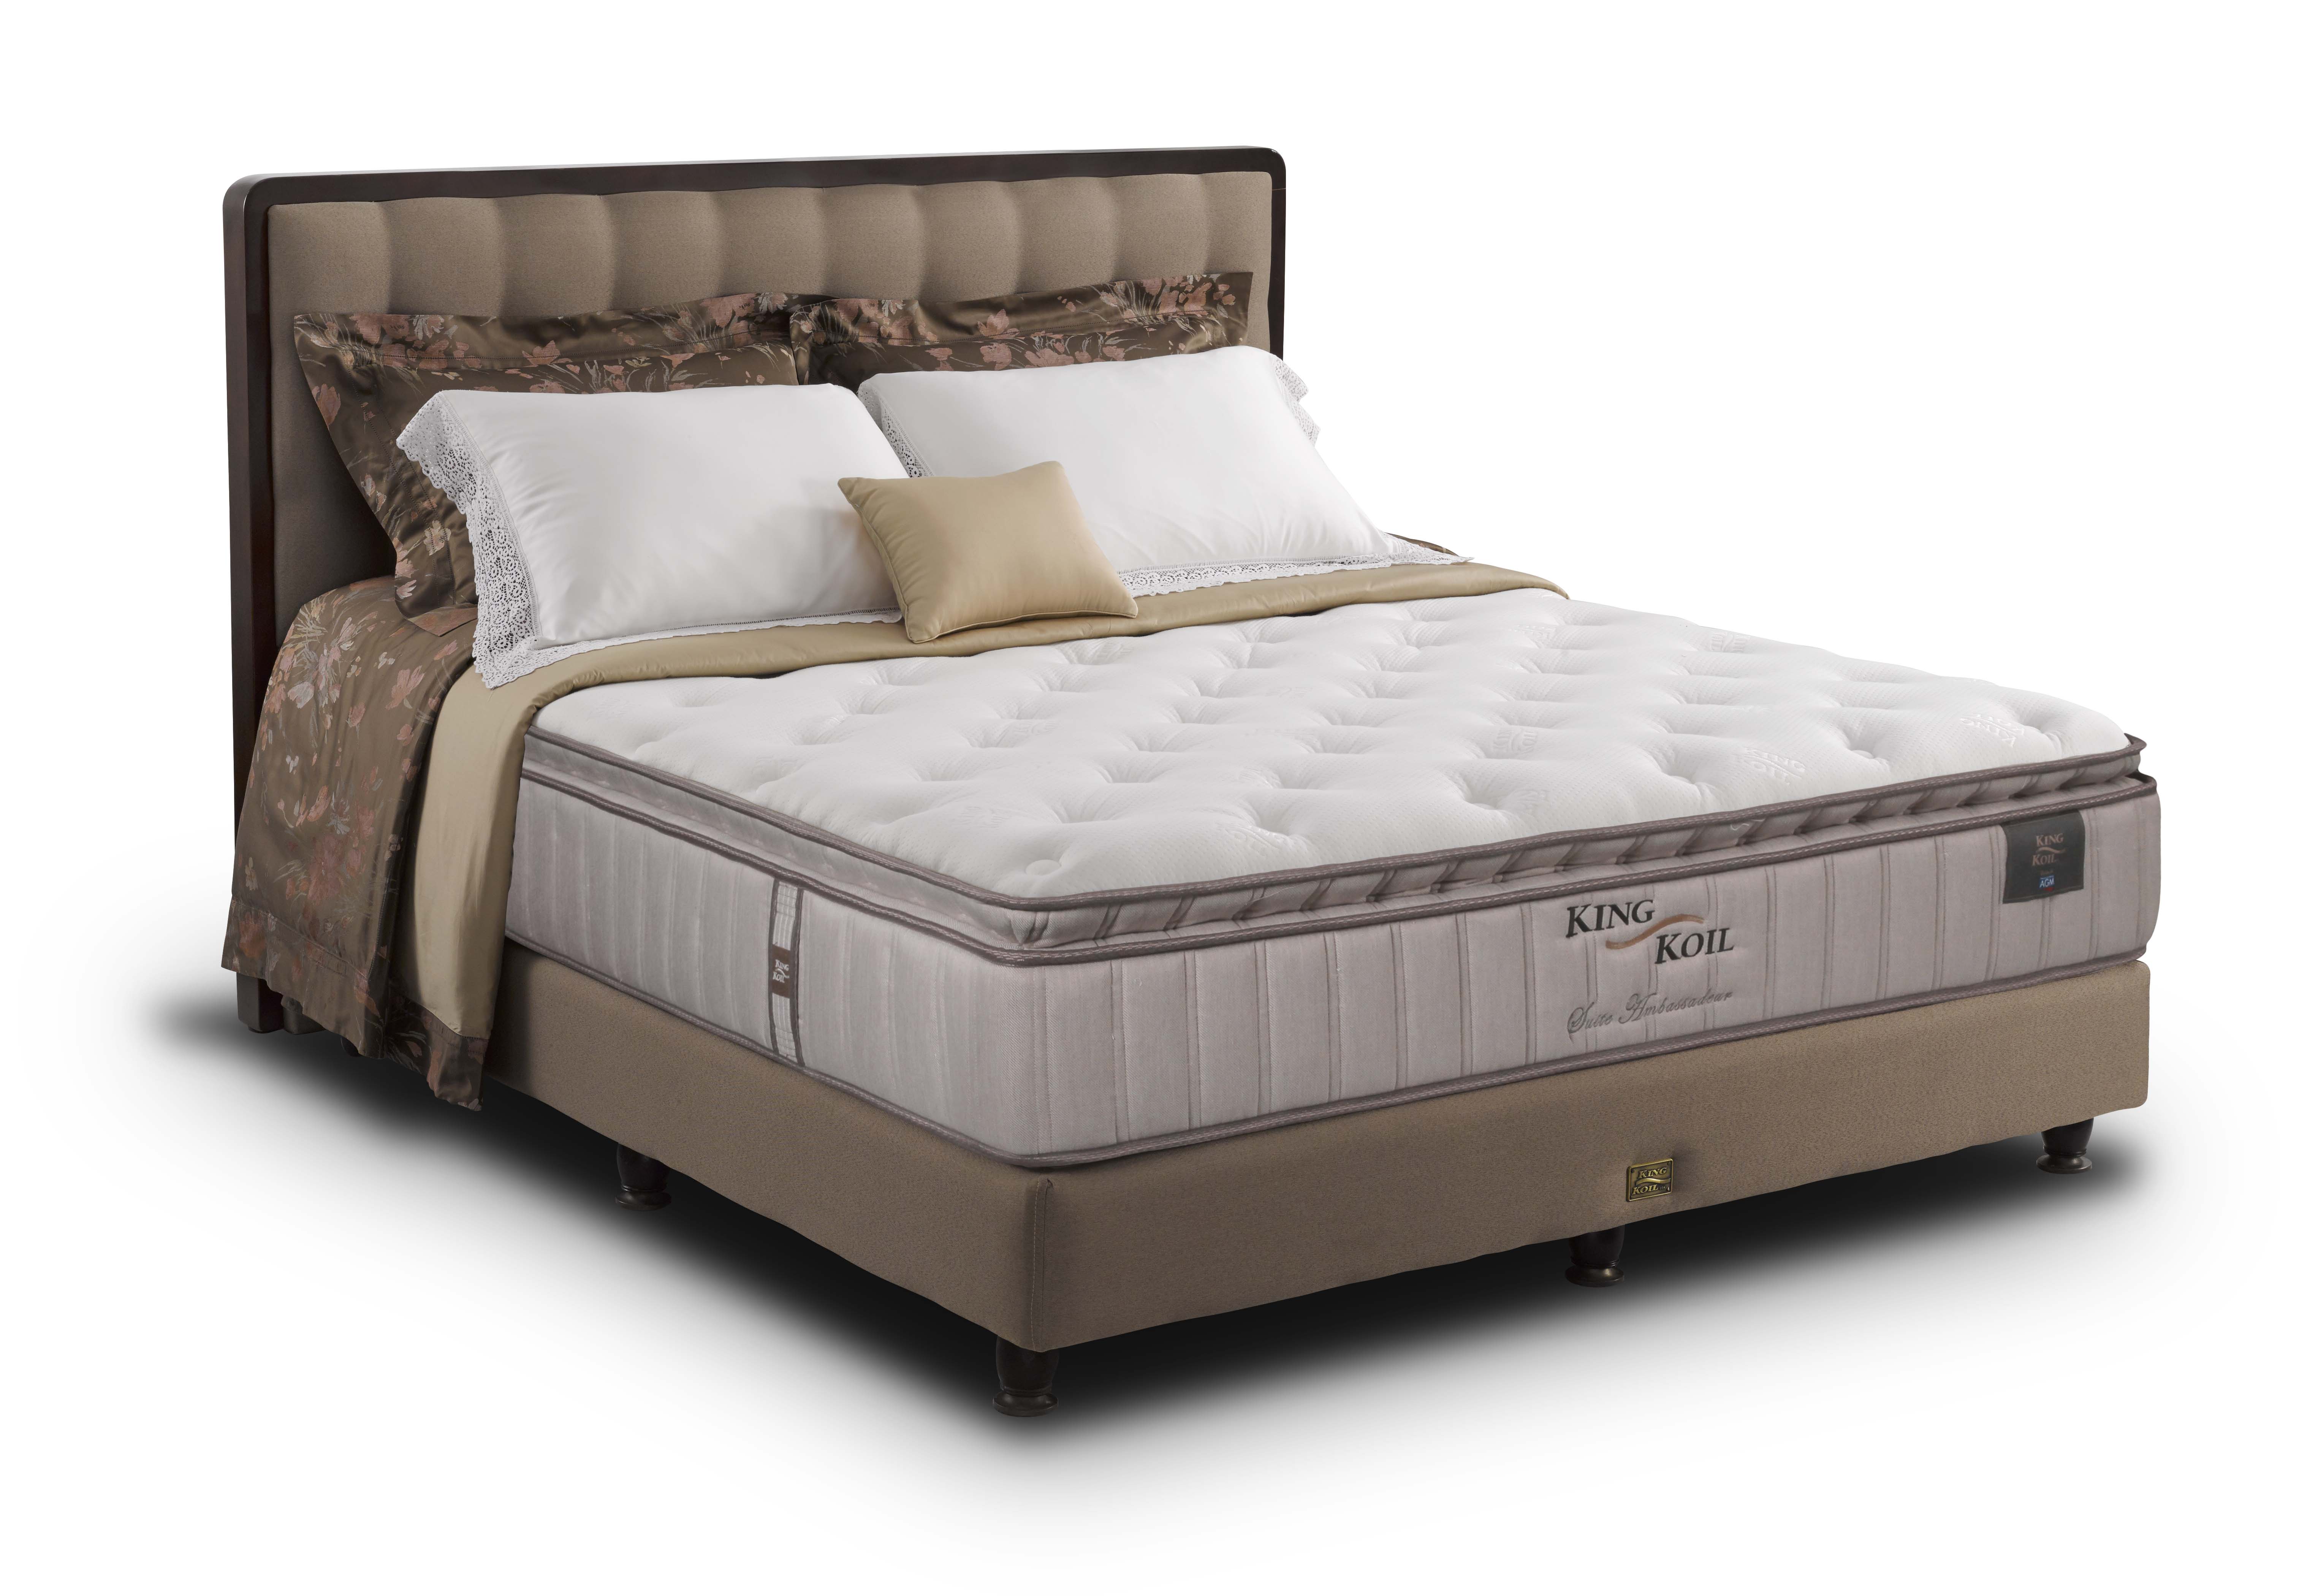 sleeping giant mattress company